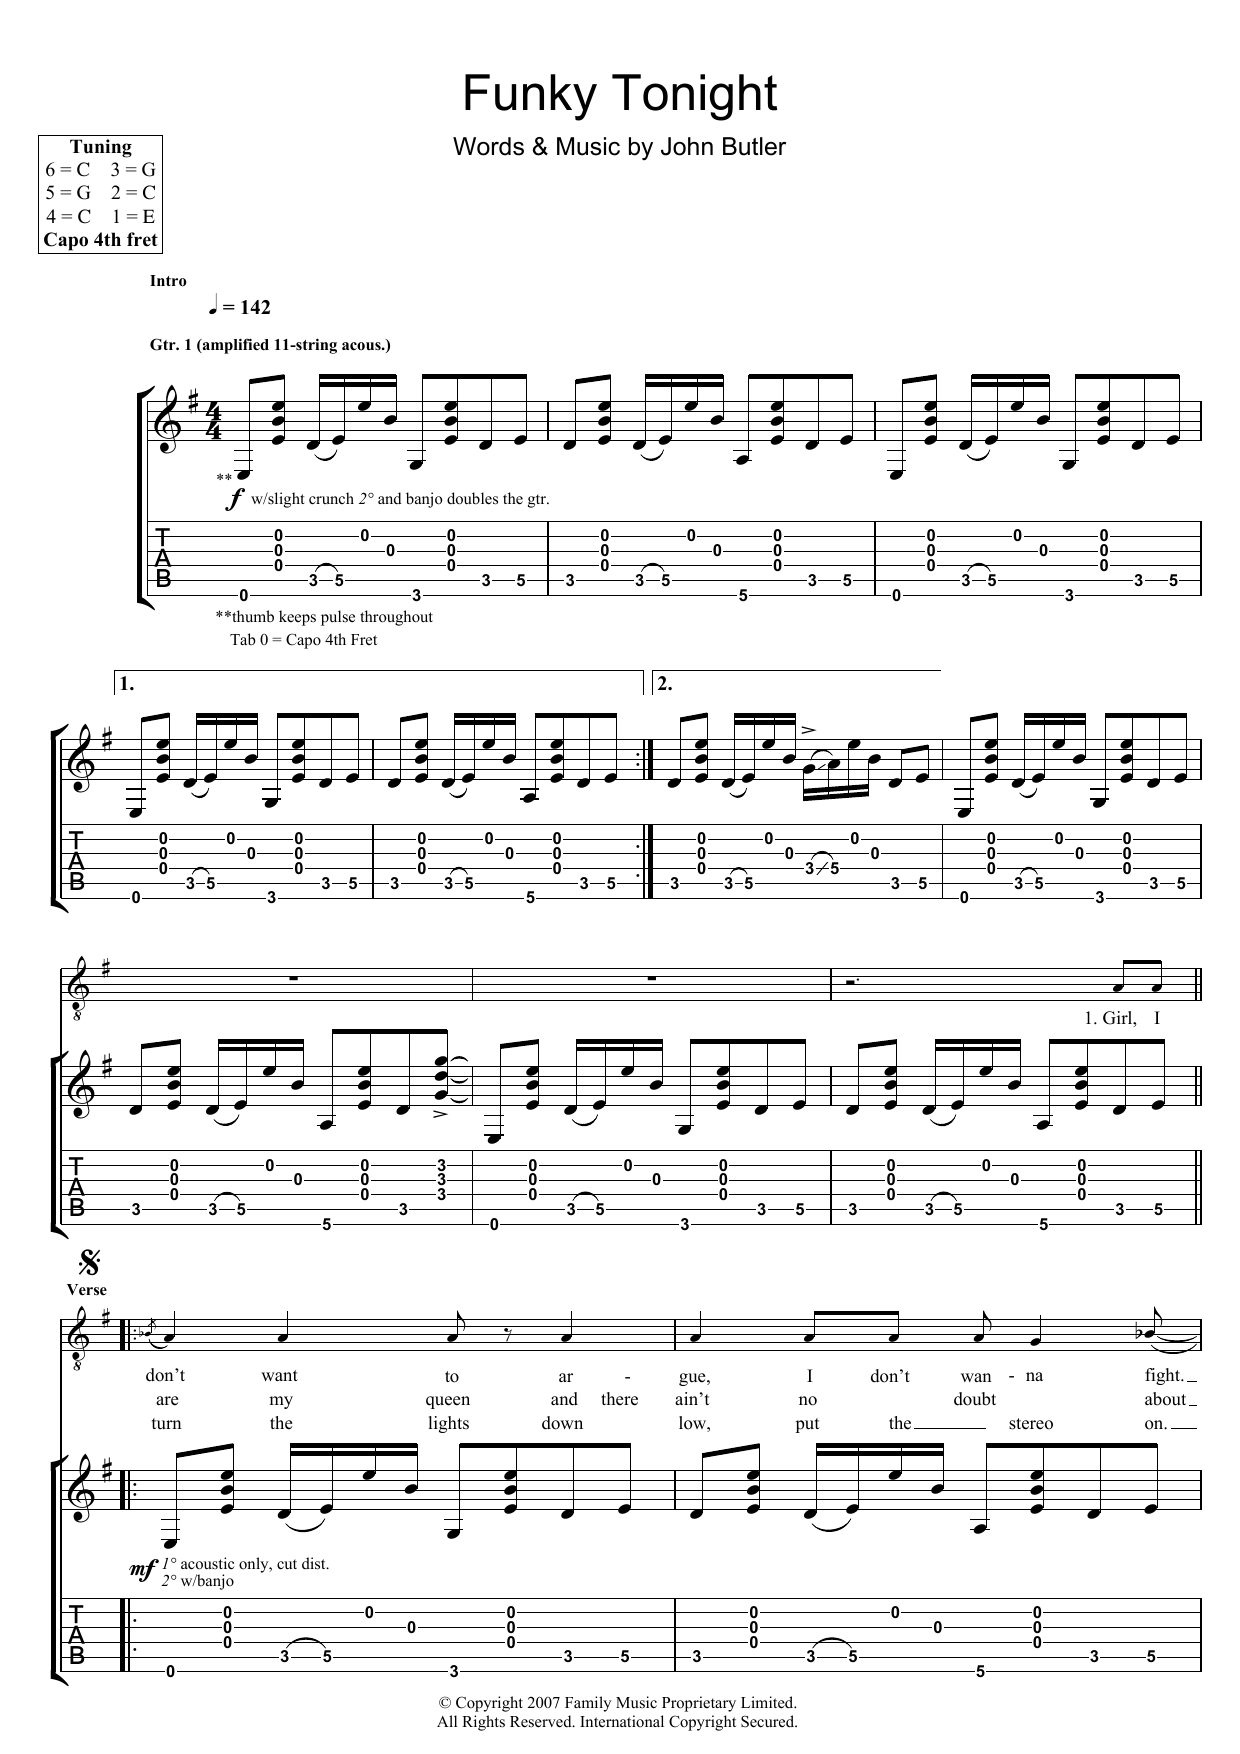 John Butler Funky Tonight Sheet Music Notes & Chords for Guitar Tab - Download or Print PDF